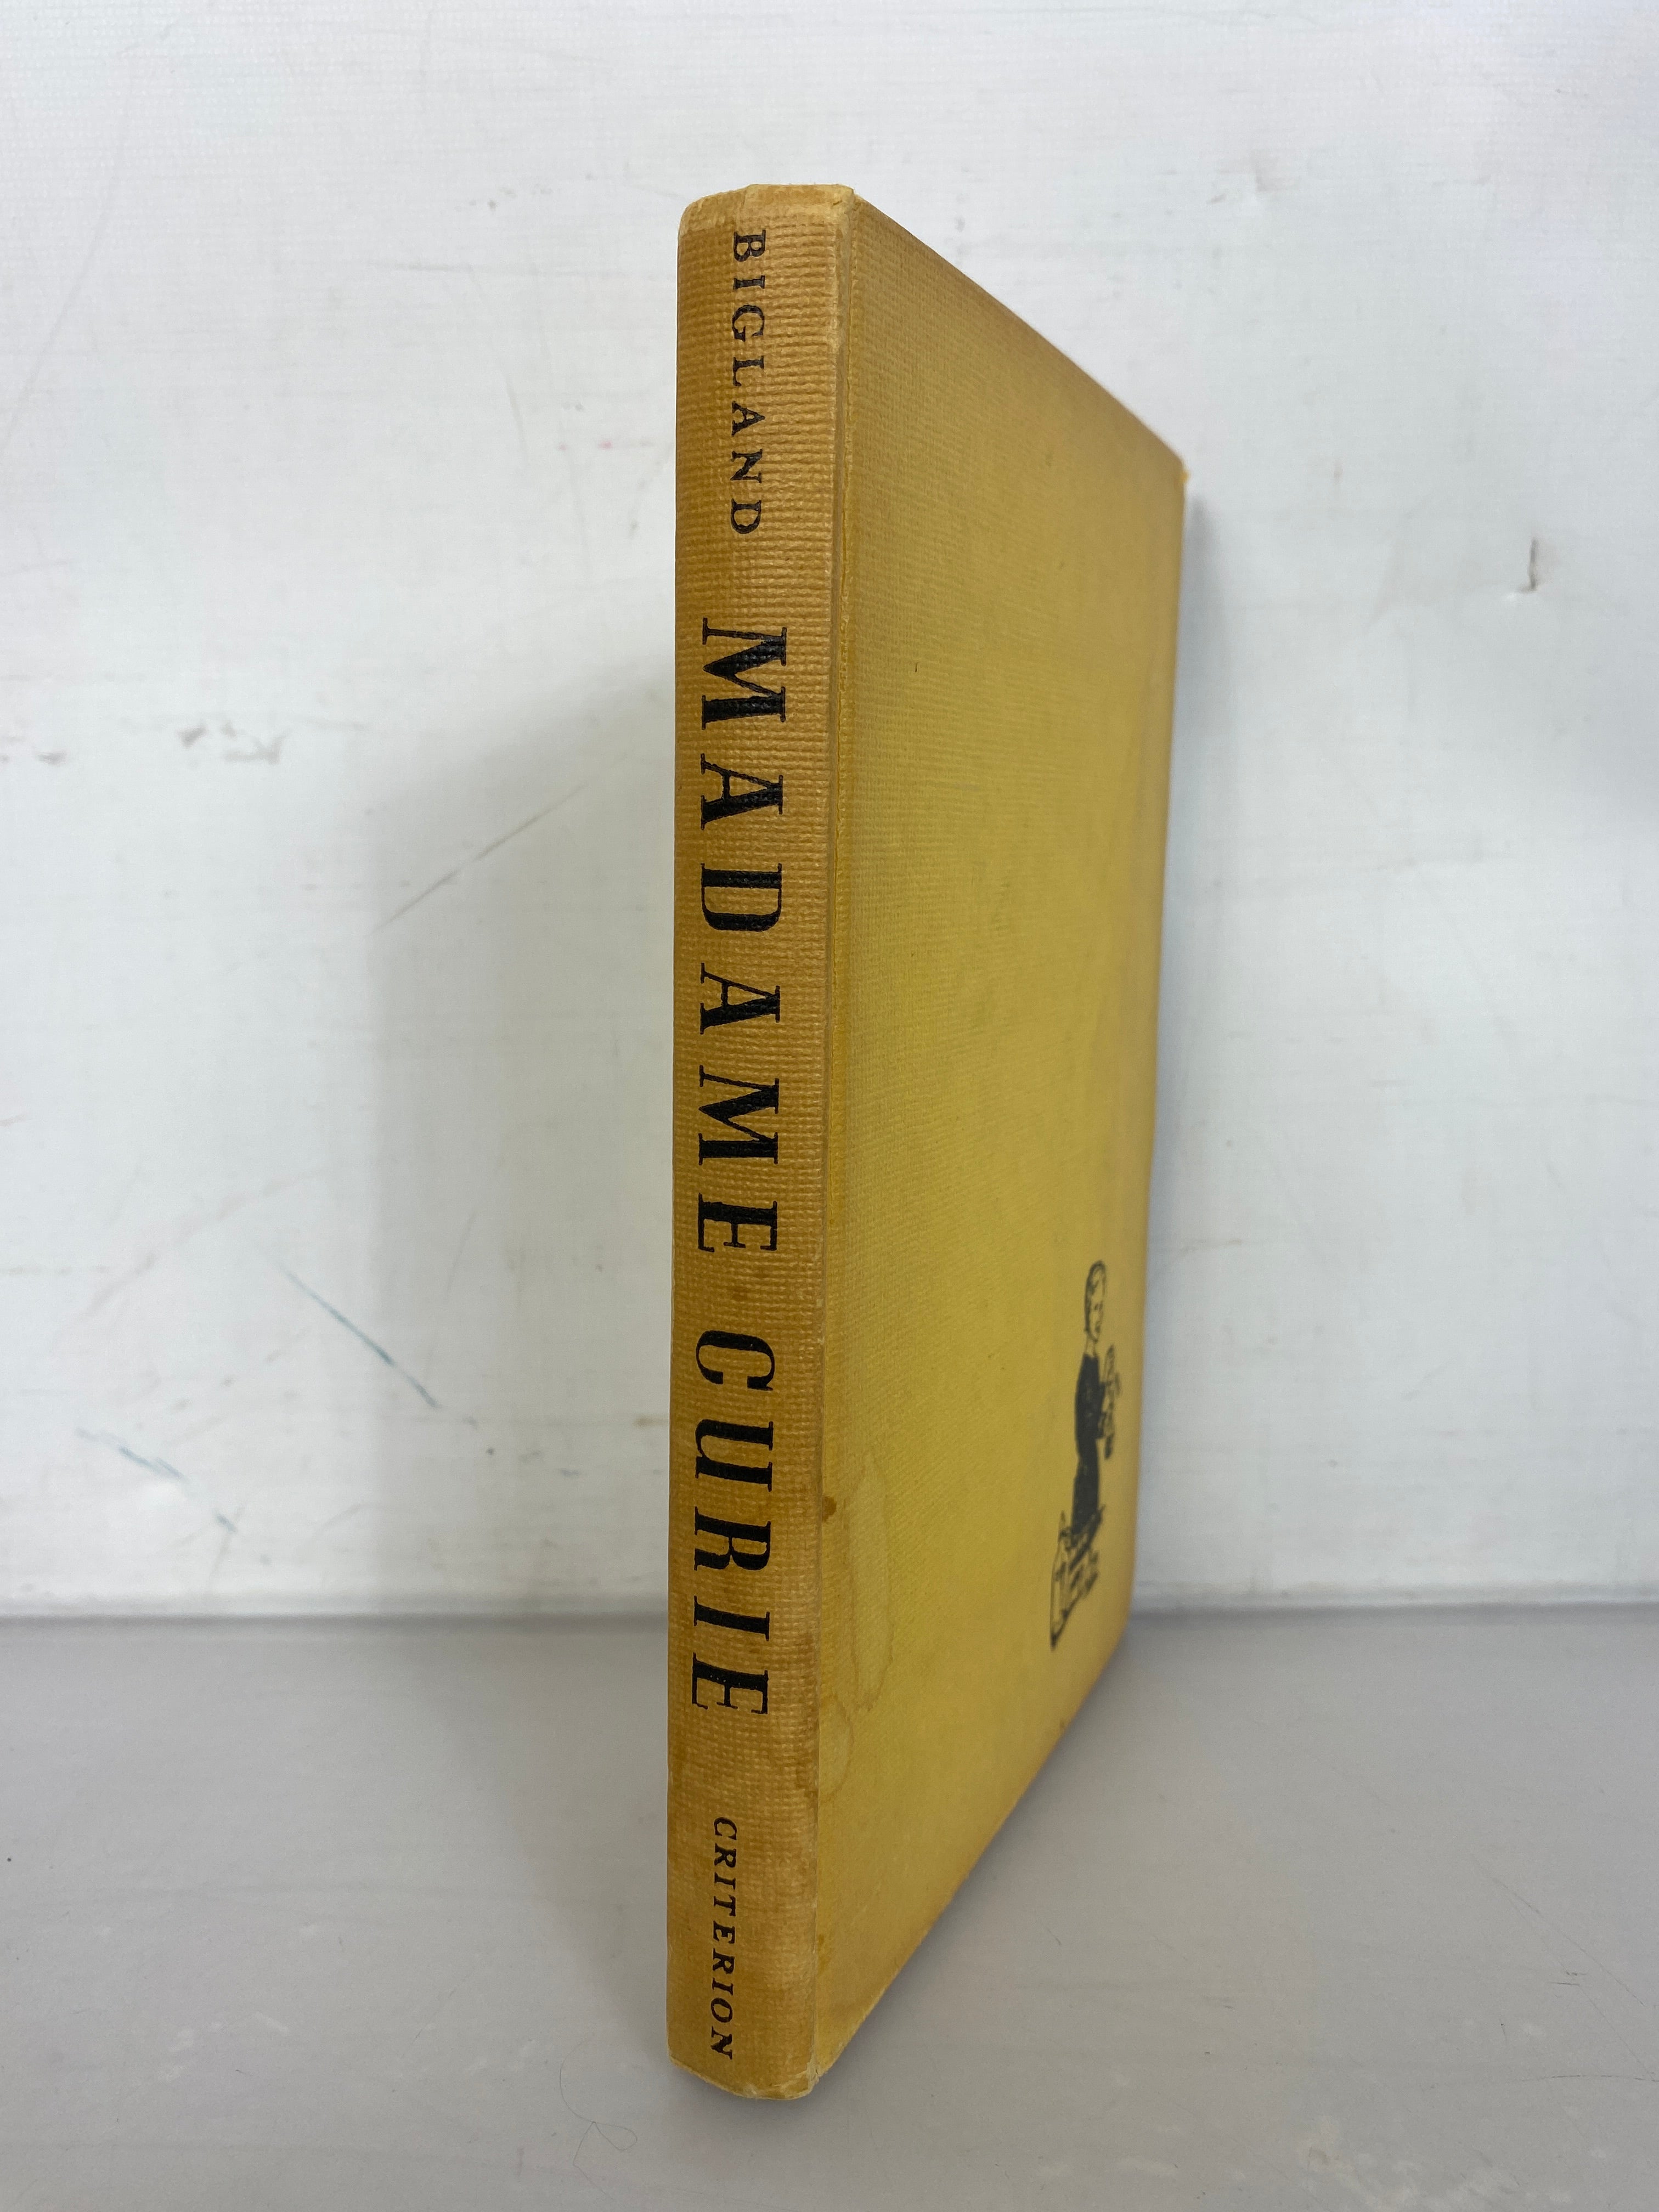 Madame Curie by Eileen Bigland 1957 Criterion Books HC